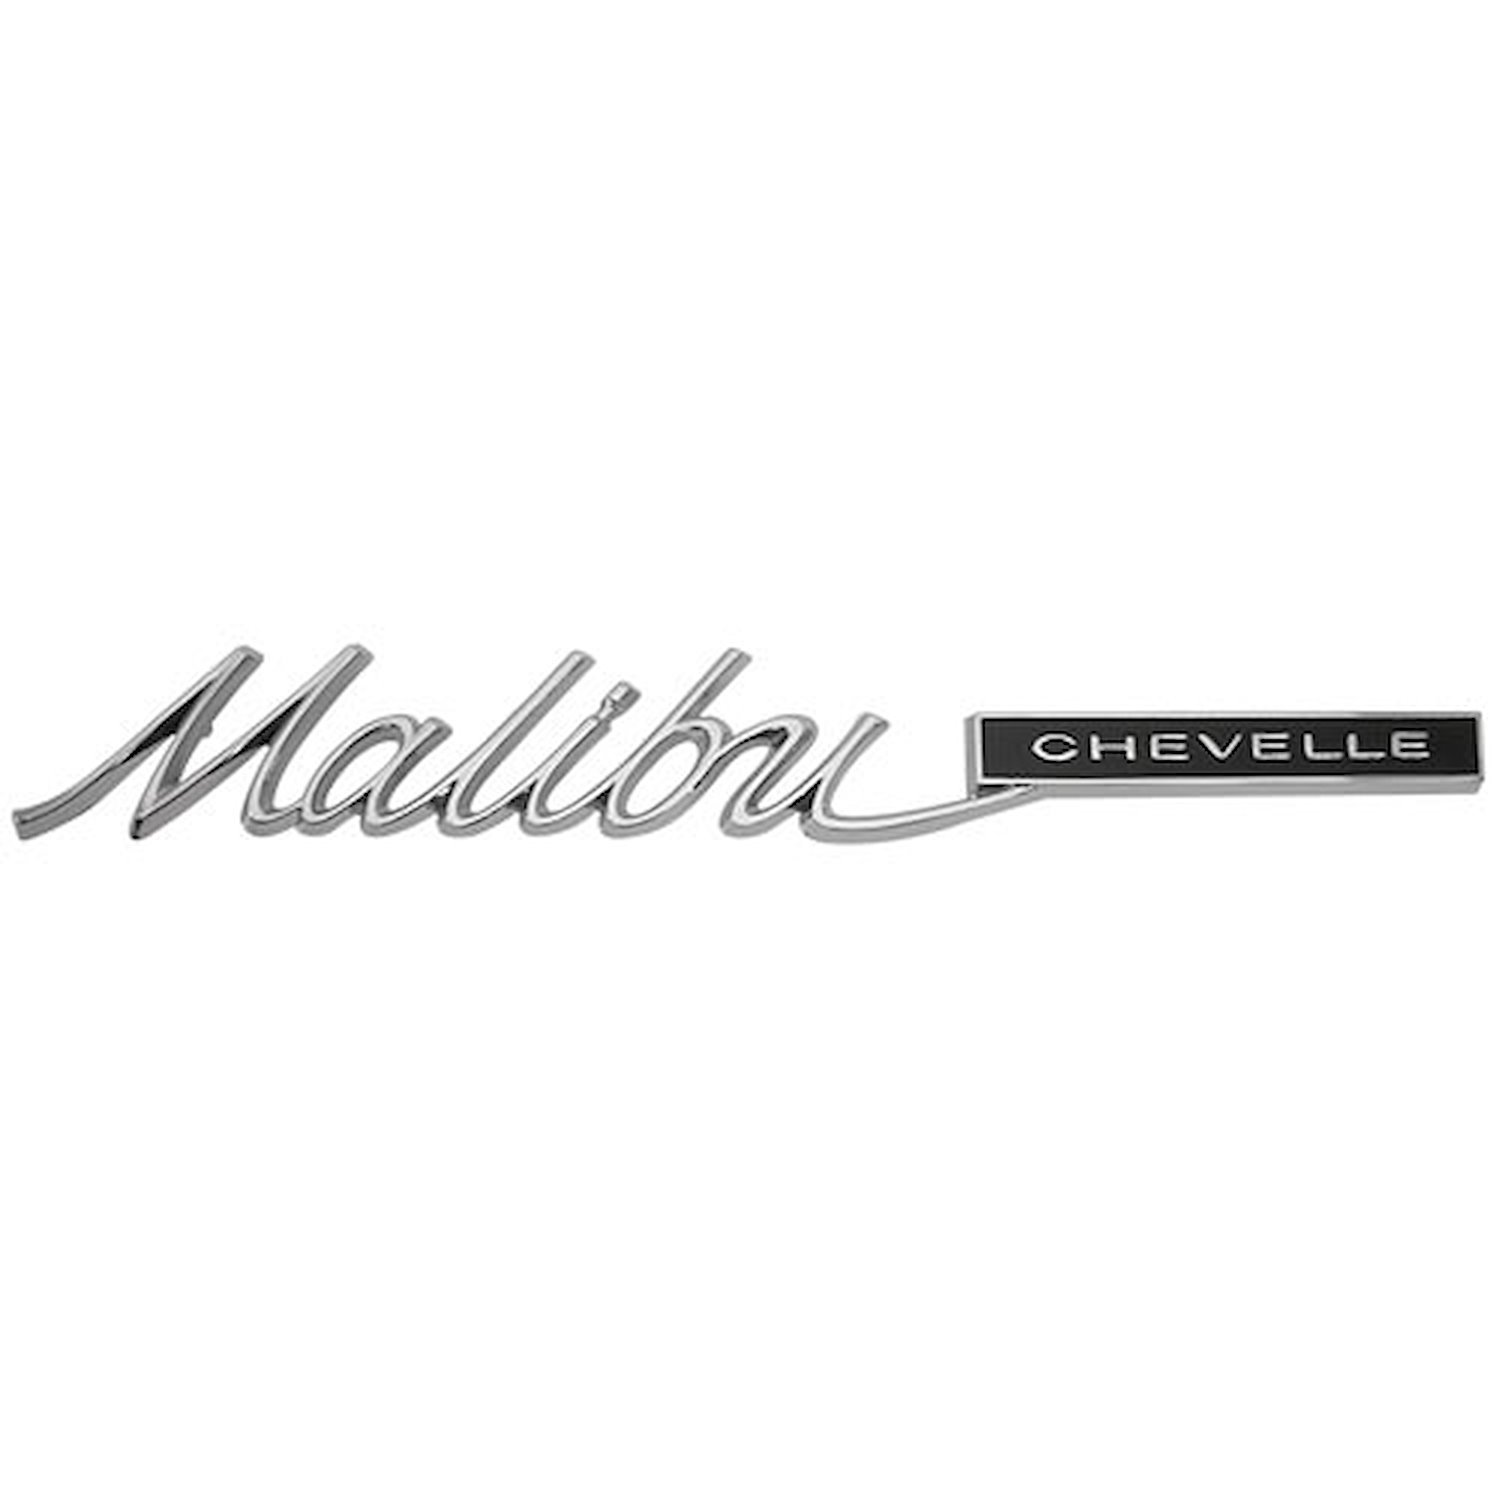 Rear Quarter Panel Emblem 1965 Chevy Chevelle Malibu